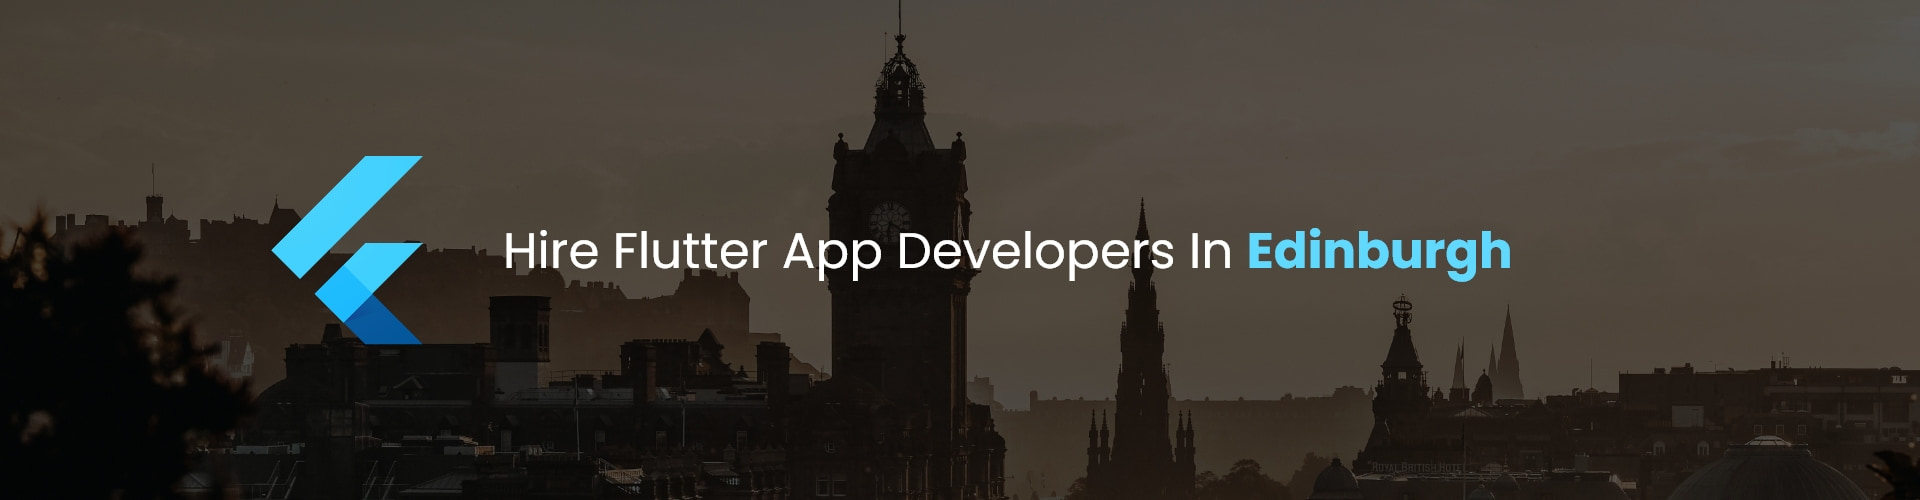 hire flutter app developers in edinburgh